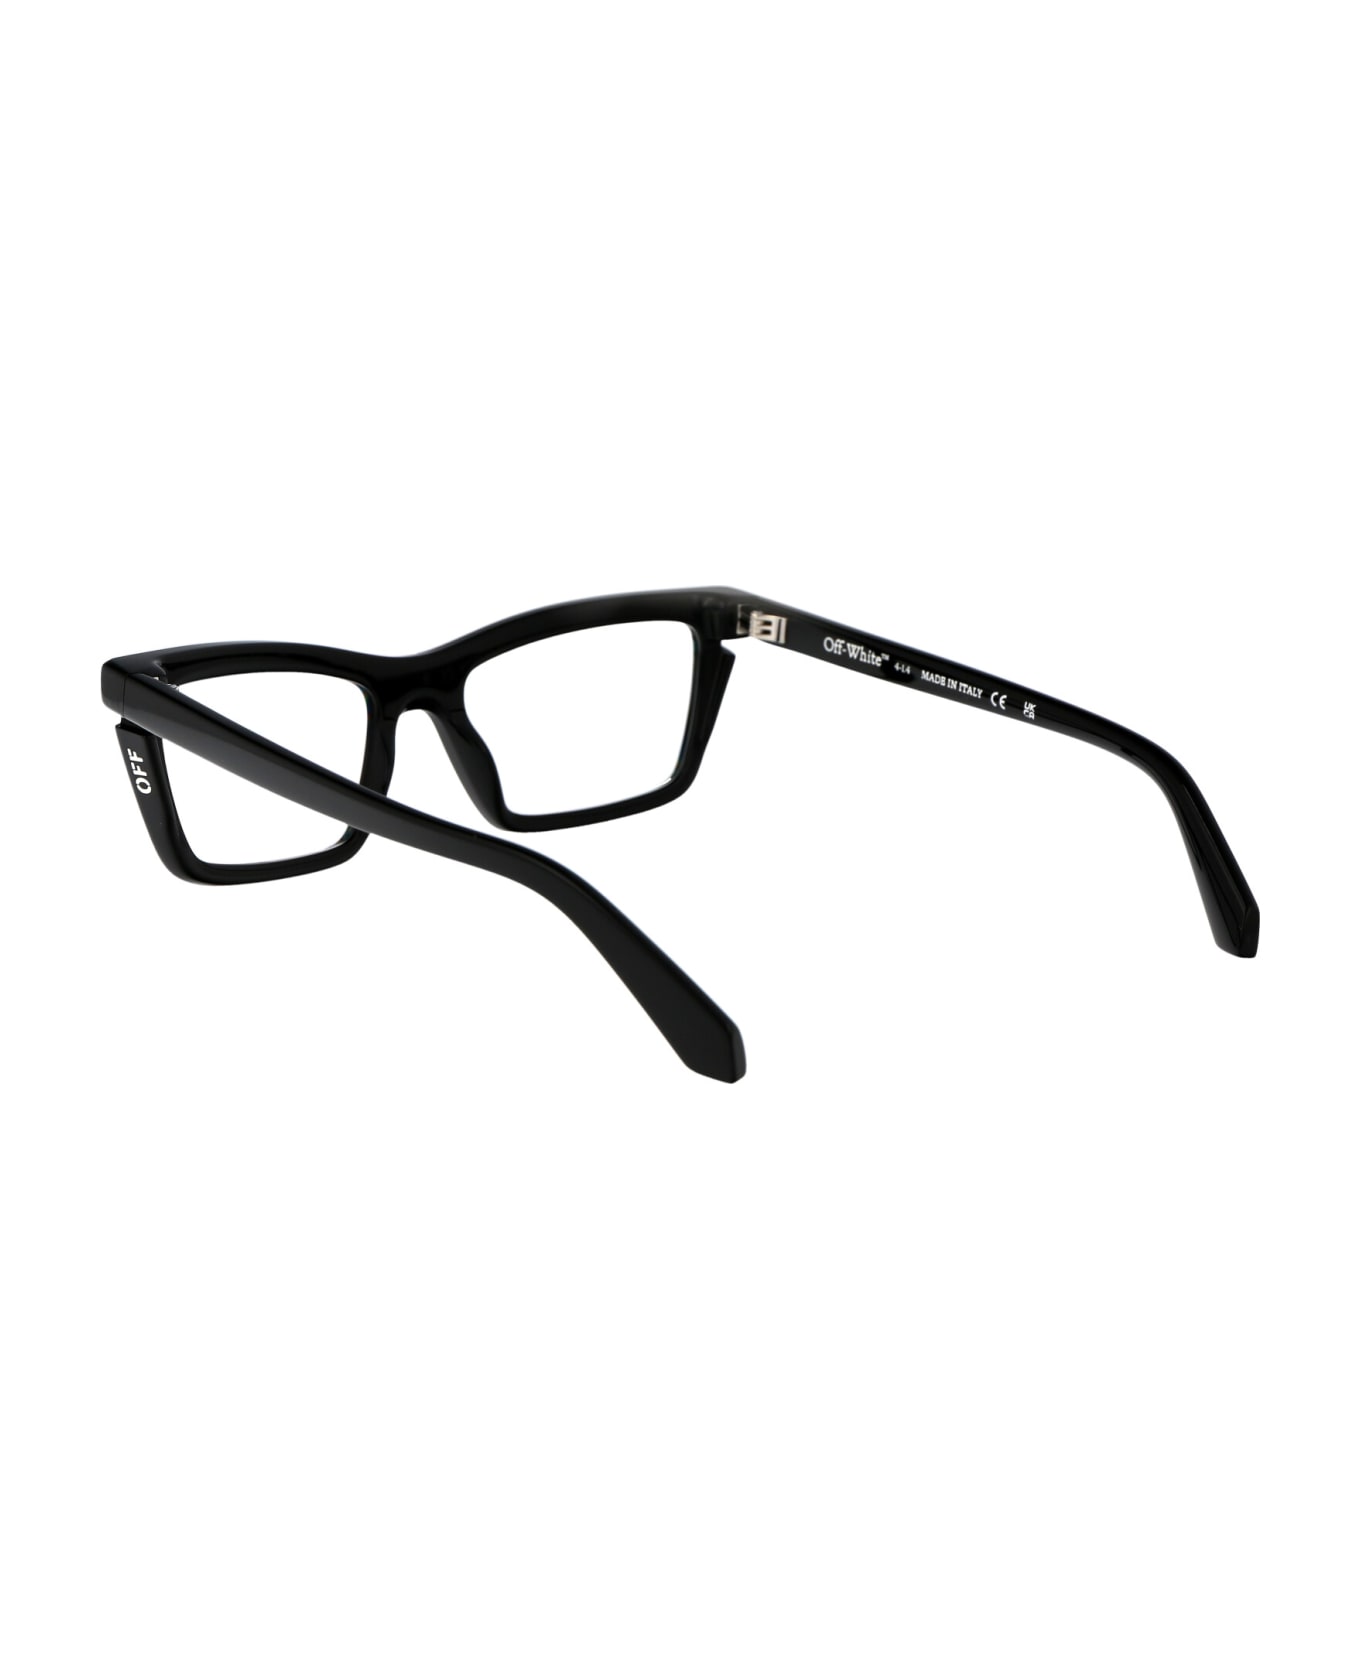 Off-White Optical Style 50 Glasses - 1000 BLACK